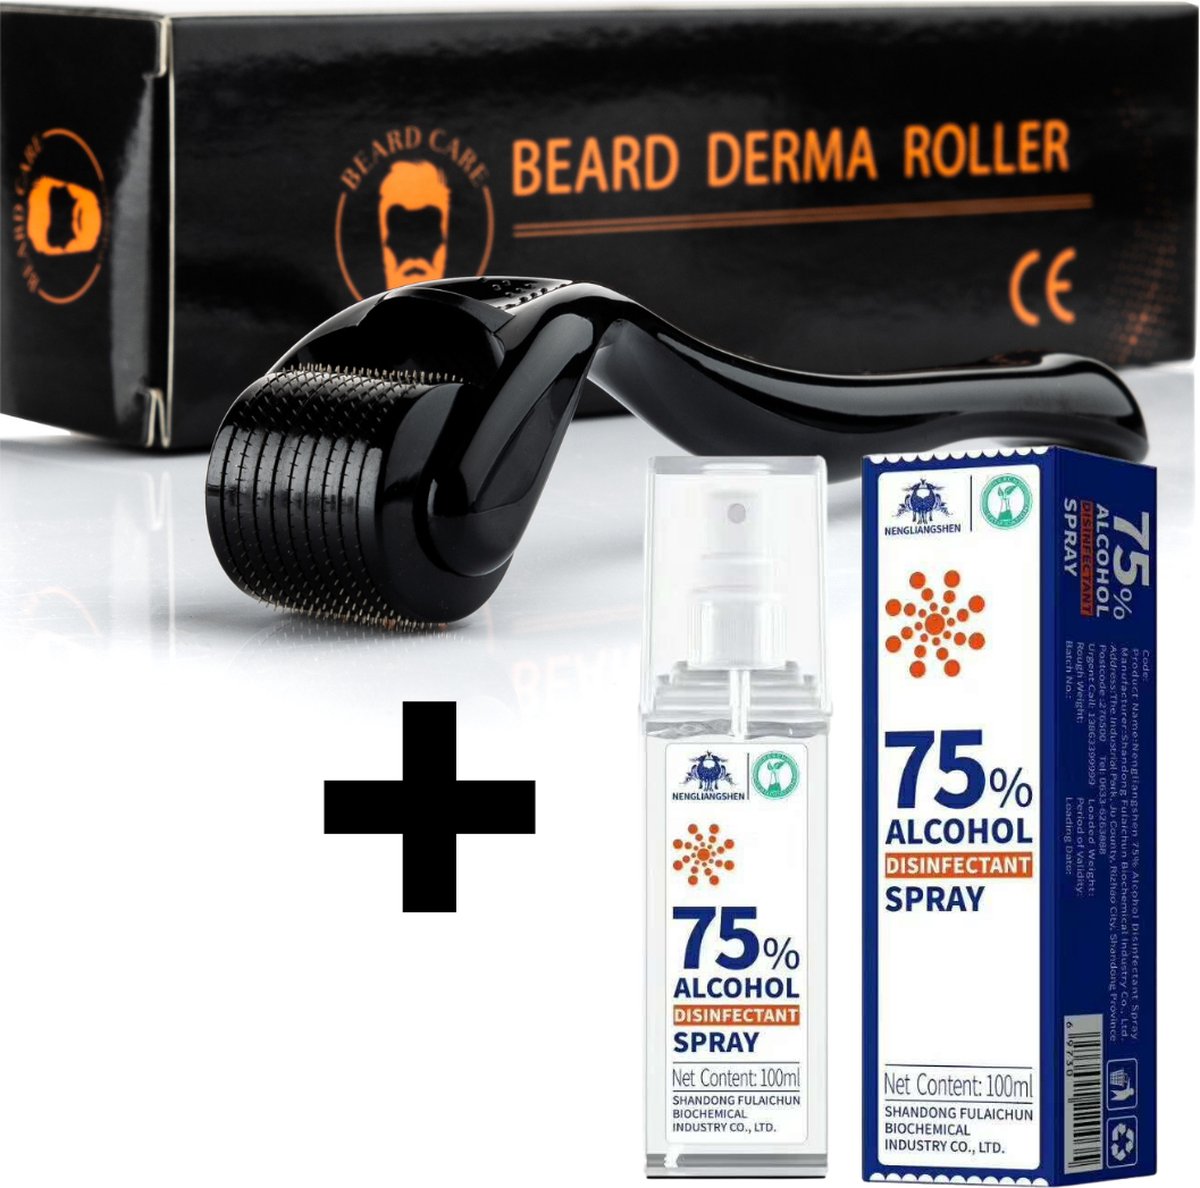 LB PRODUCTS - Baard / Derma Roller + Sanitizer 100ml - Ontsmetting spray - Baardgroei stimuleren - Baard verzorging - Steriel verpakt - 0,5mm